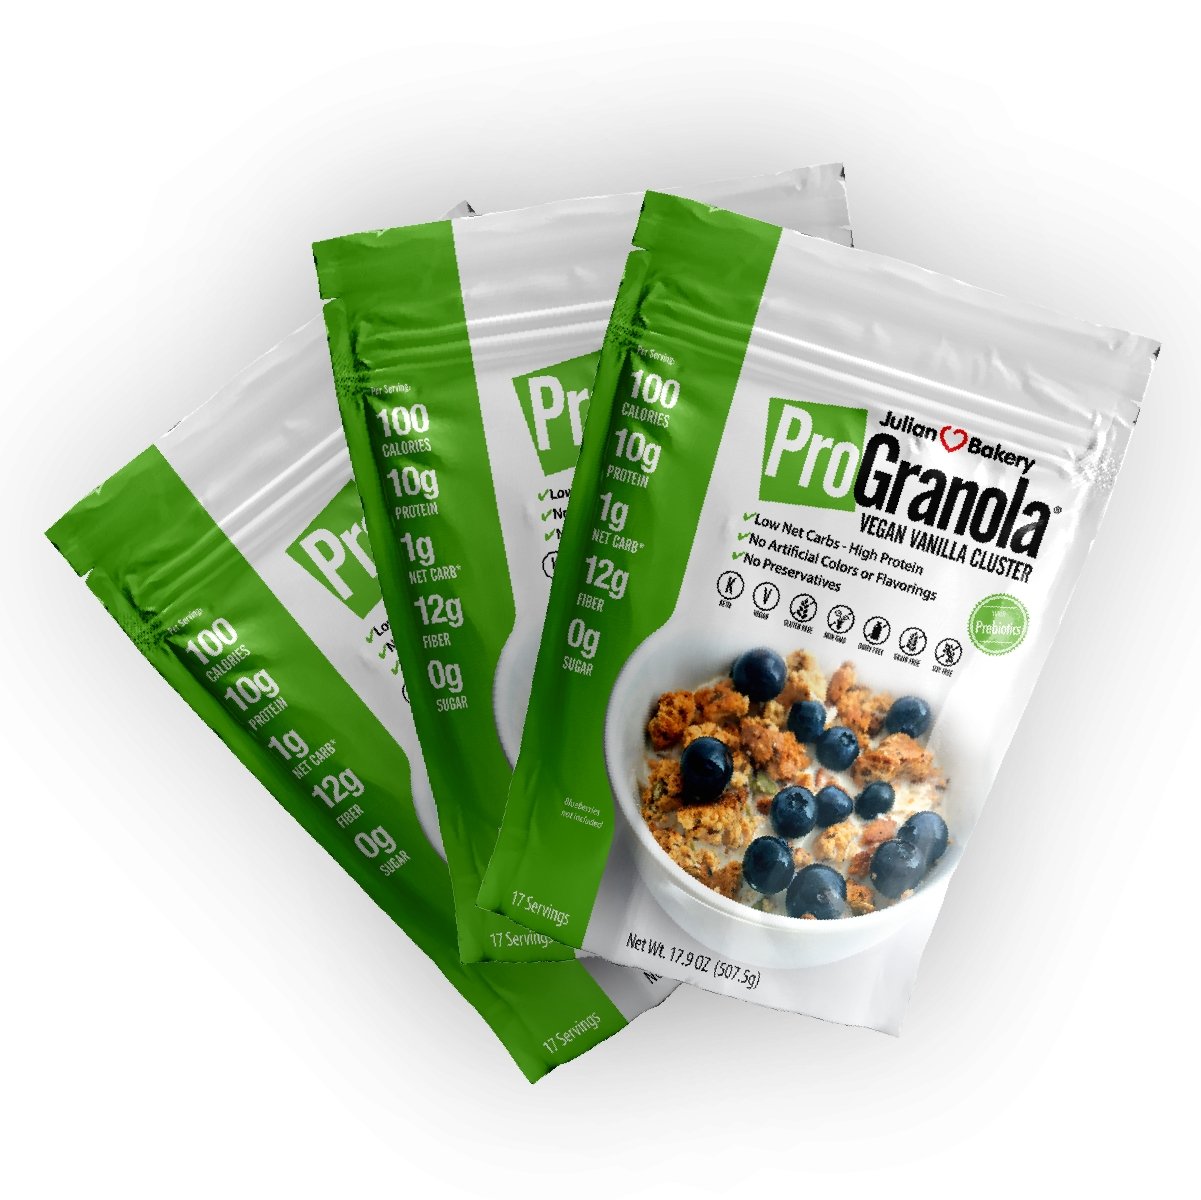 ProGranola® Vegan Vanilla Cluster - Julian Bakery